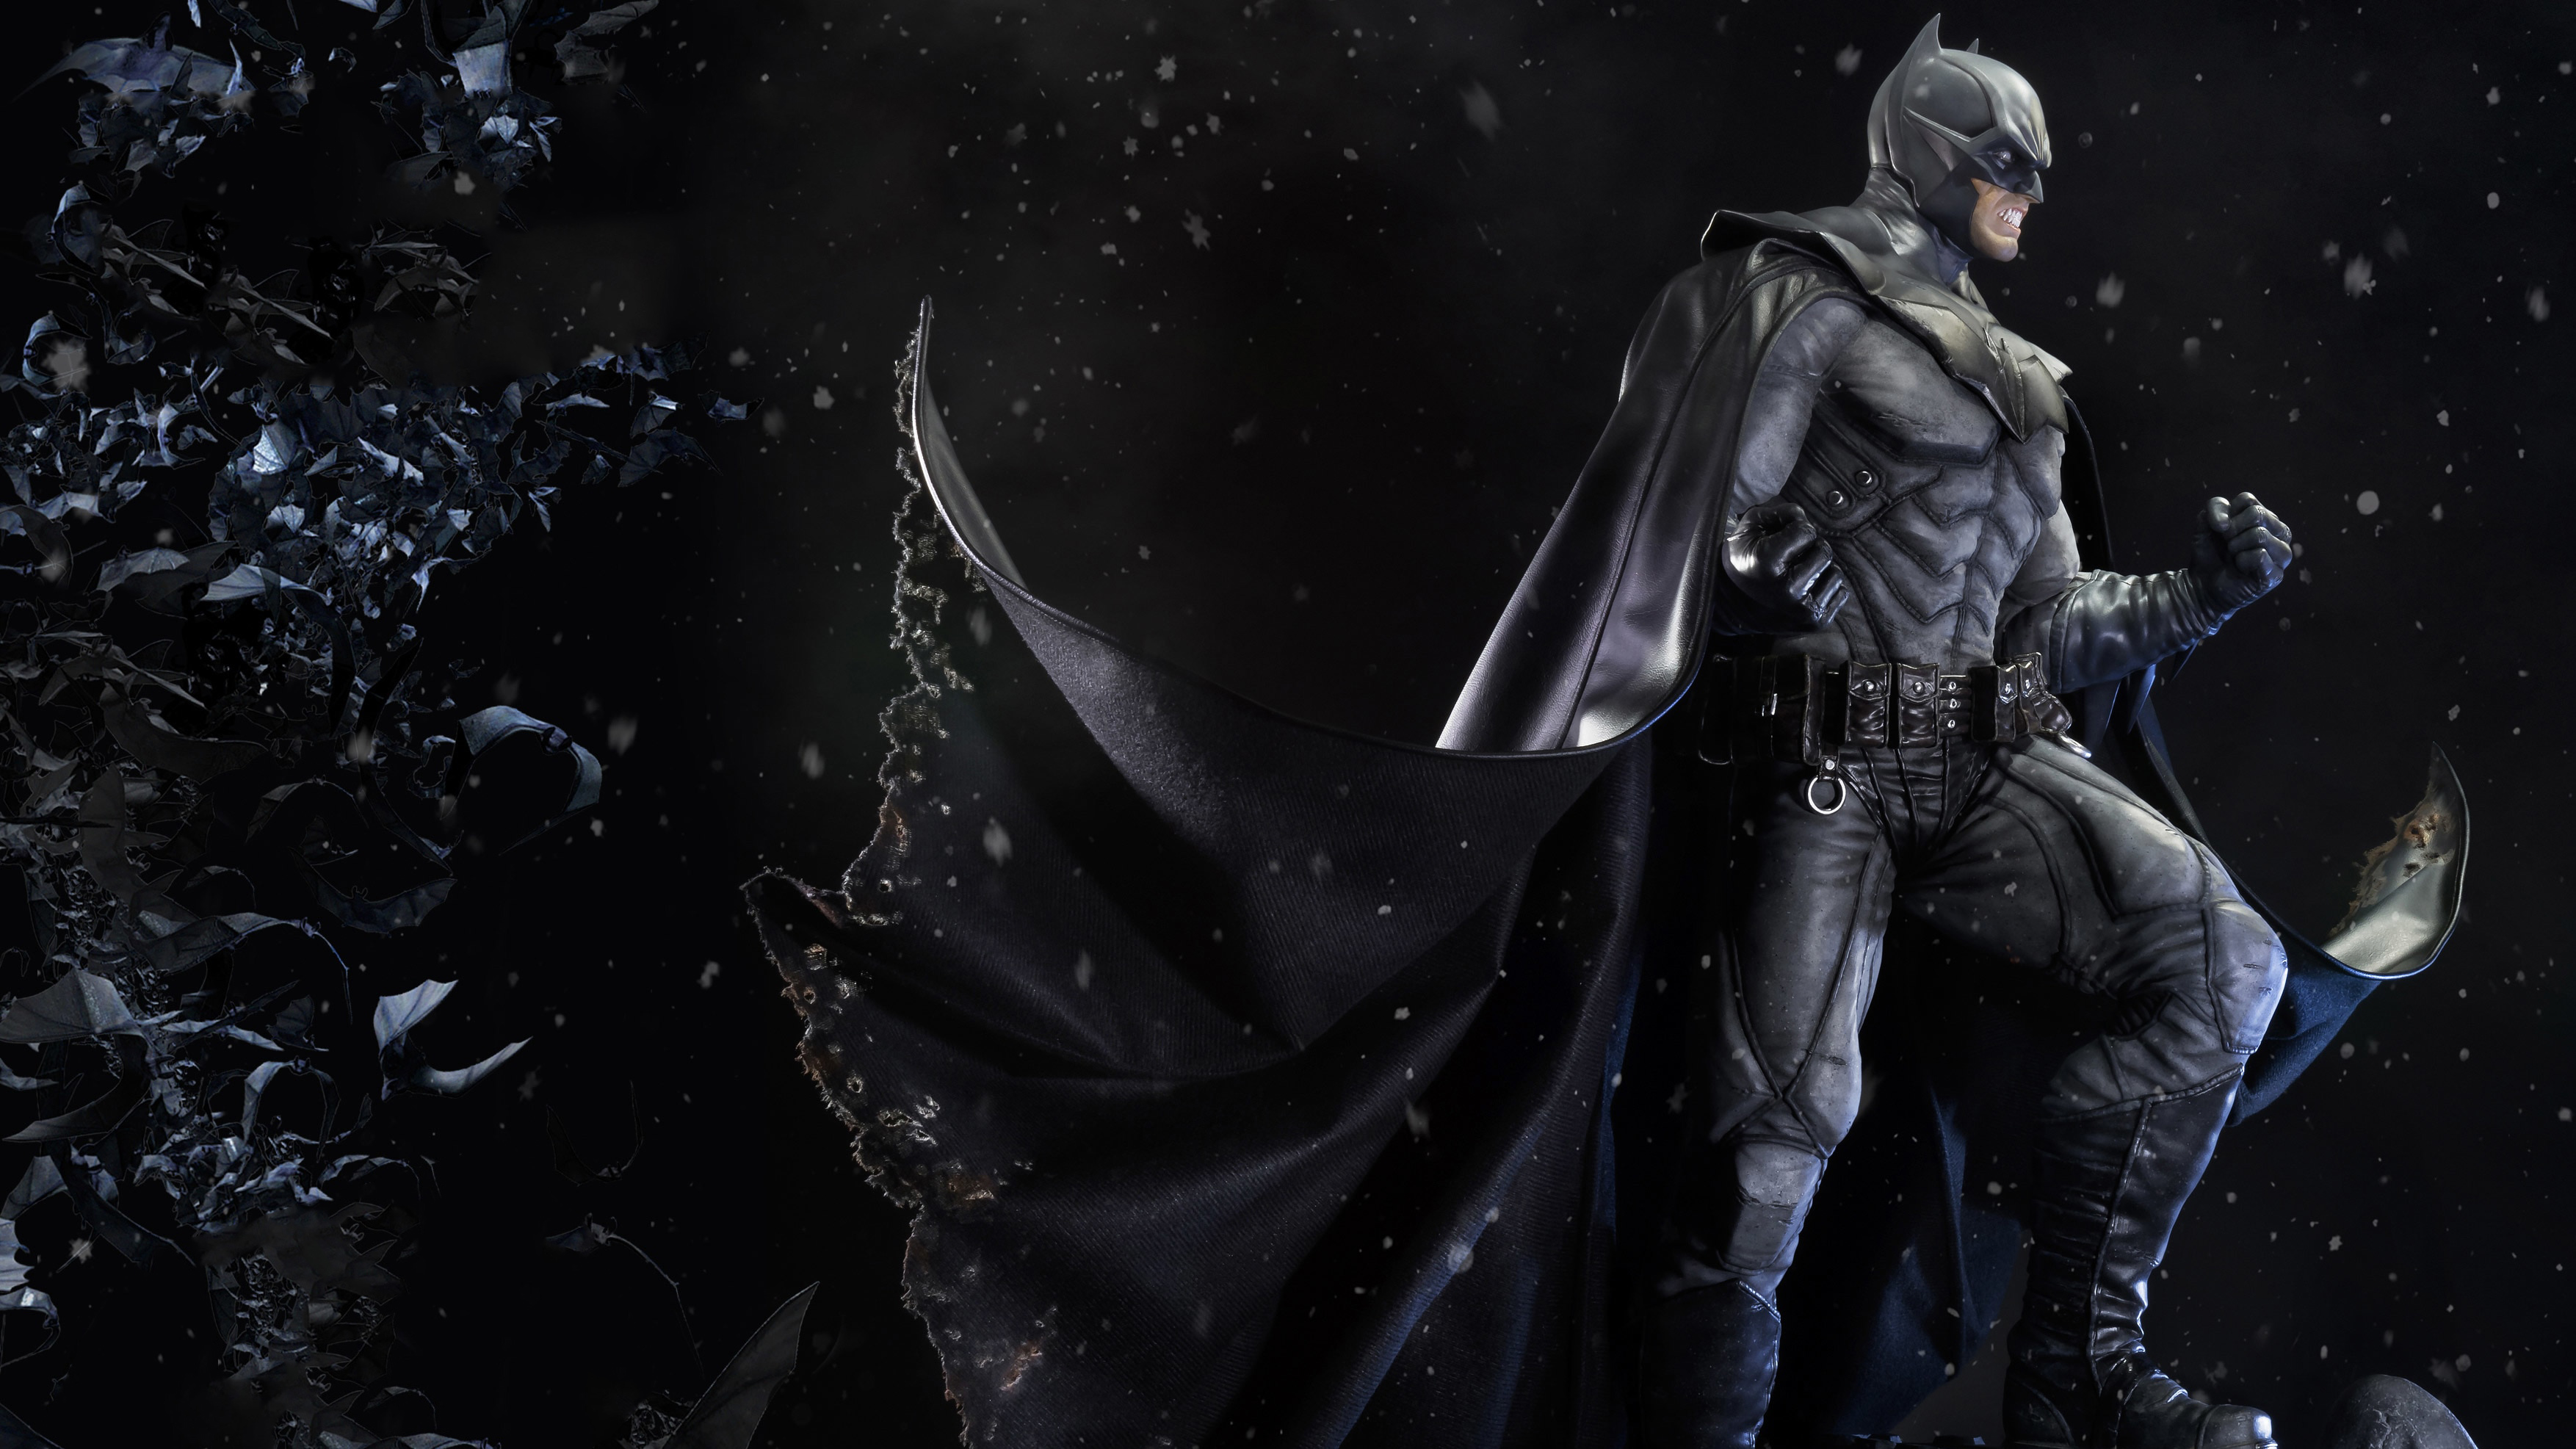 Batman Noel Version, HD Superheroes, 4k Wallpaper, Image, Background, Photo and Picture